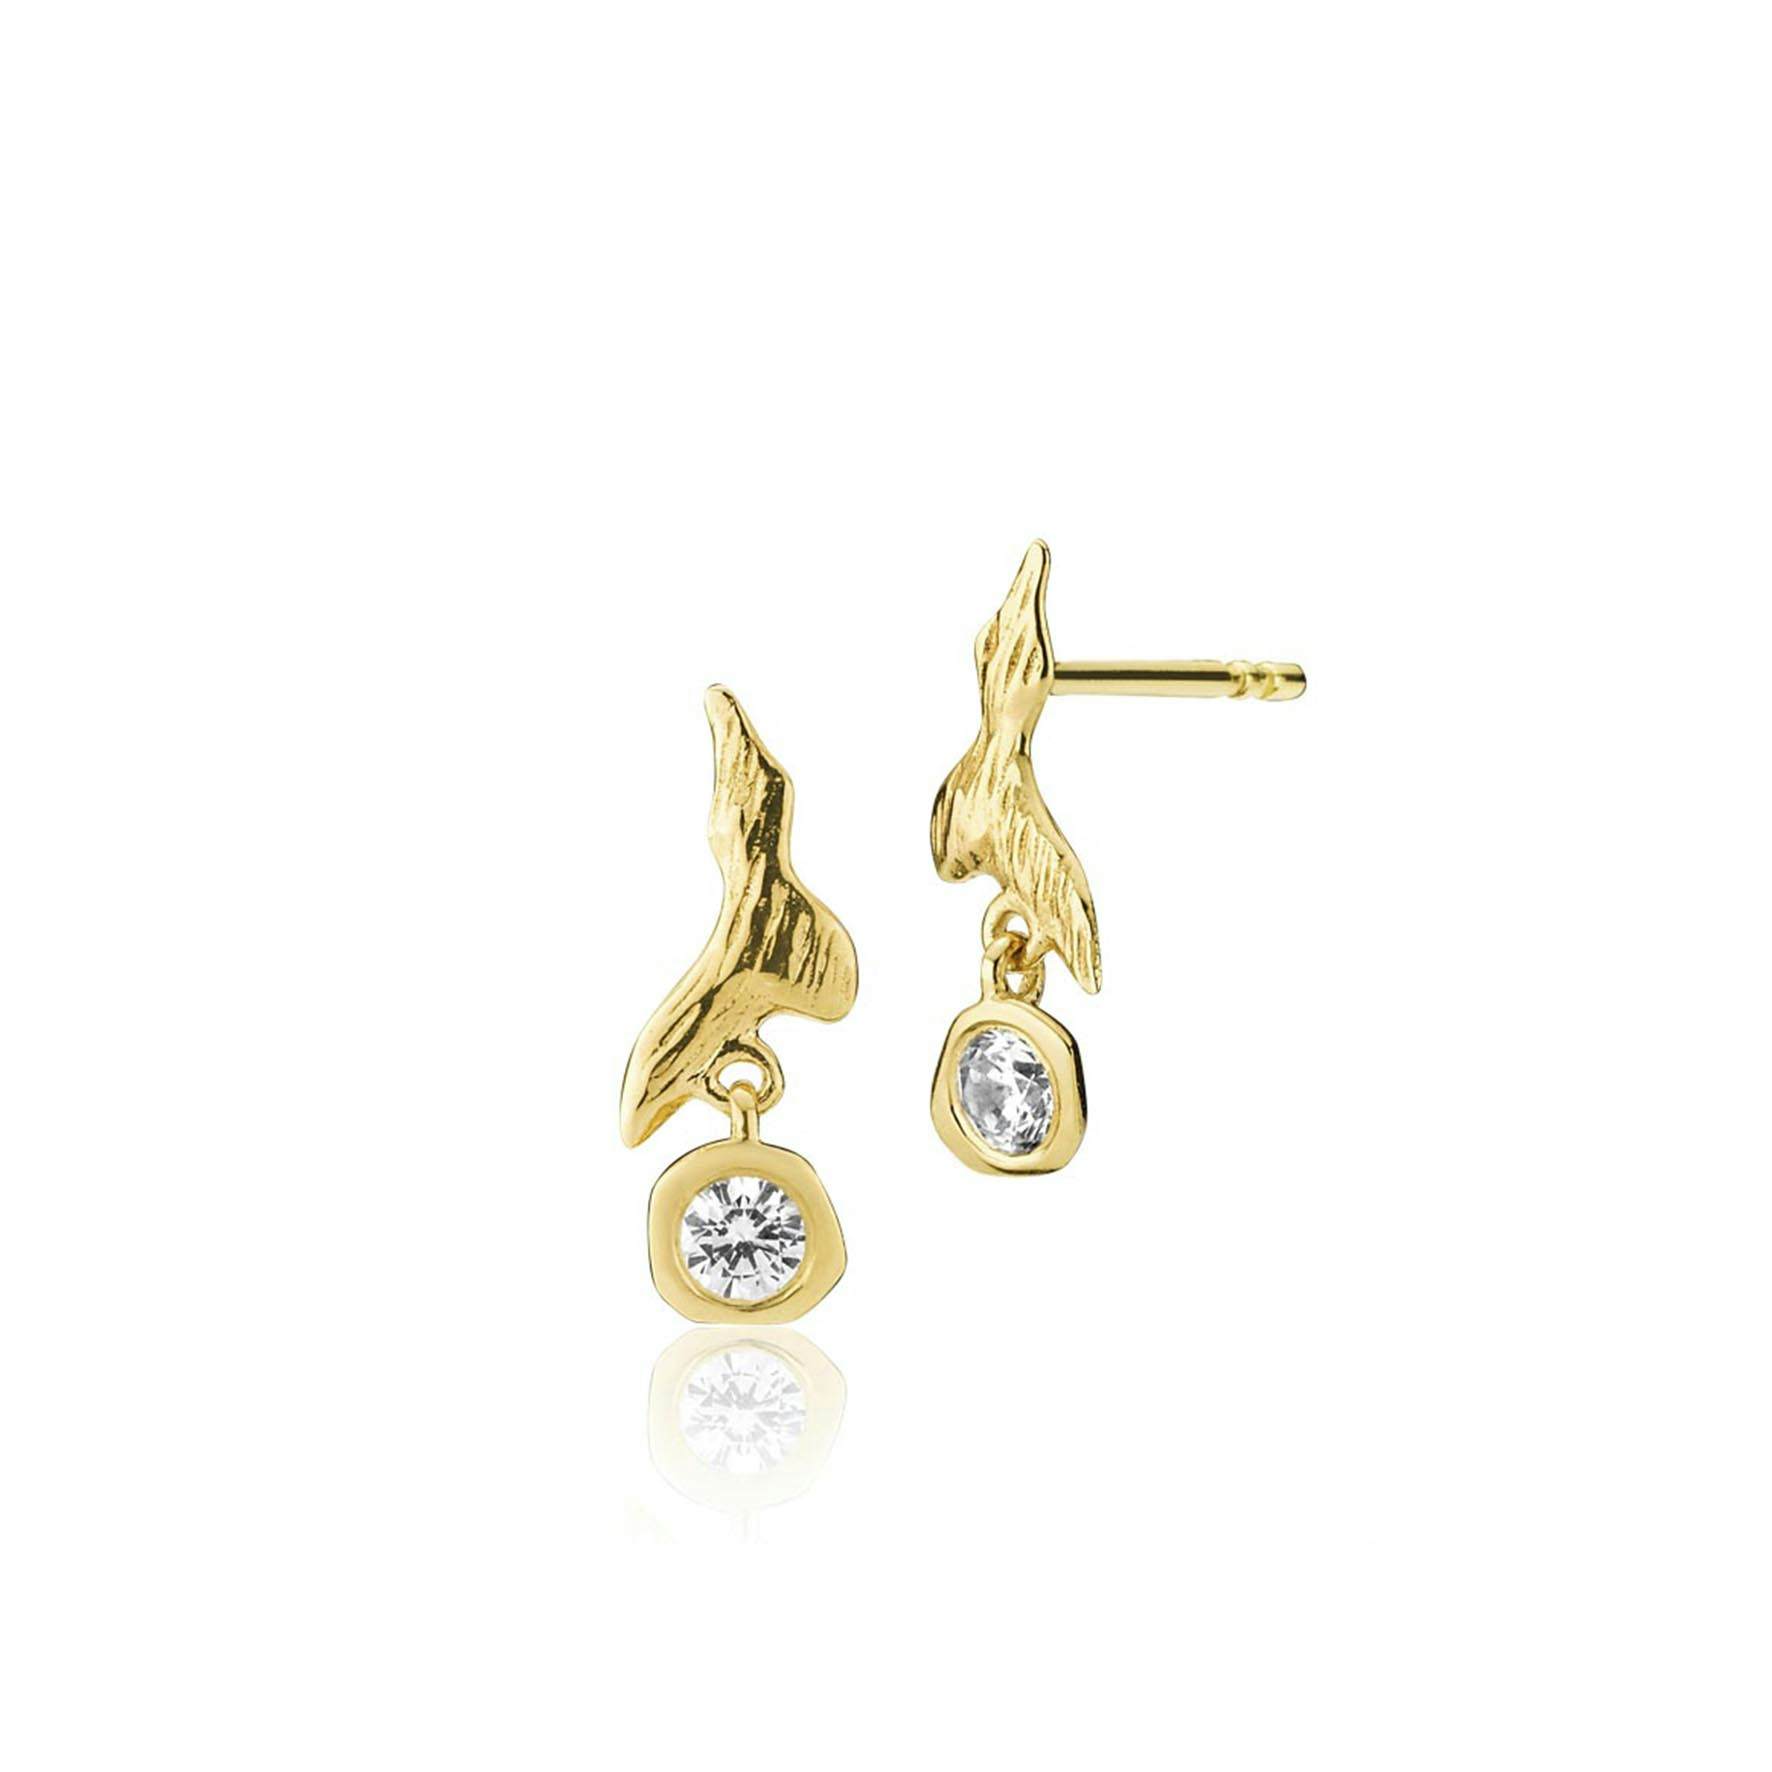 Fairy Earrings With Stone von Izabel Camille in Vergoldet-Silber Sterling 925|